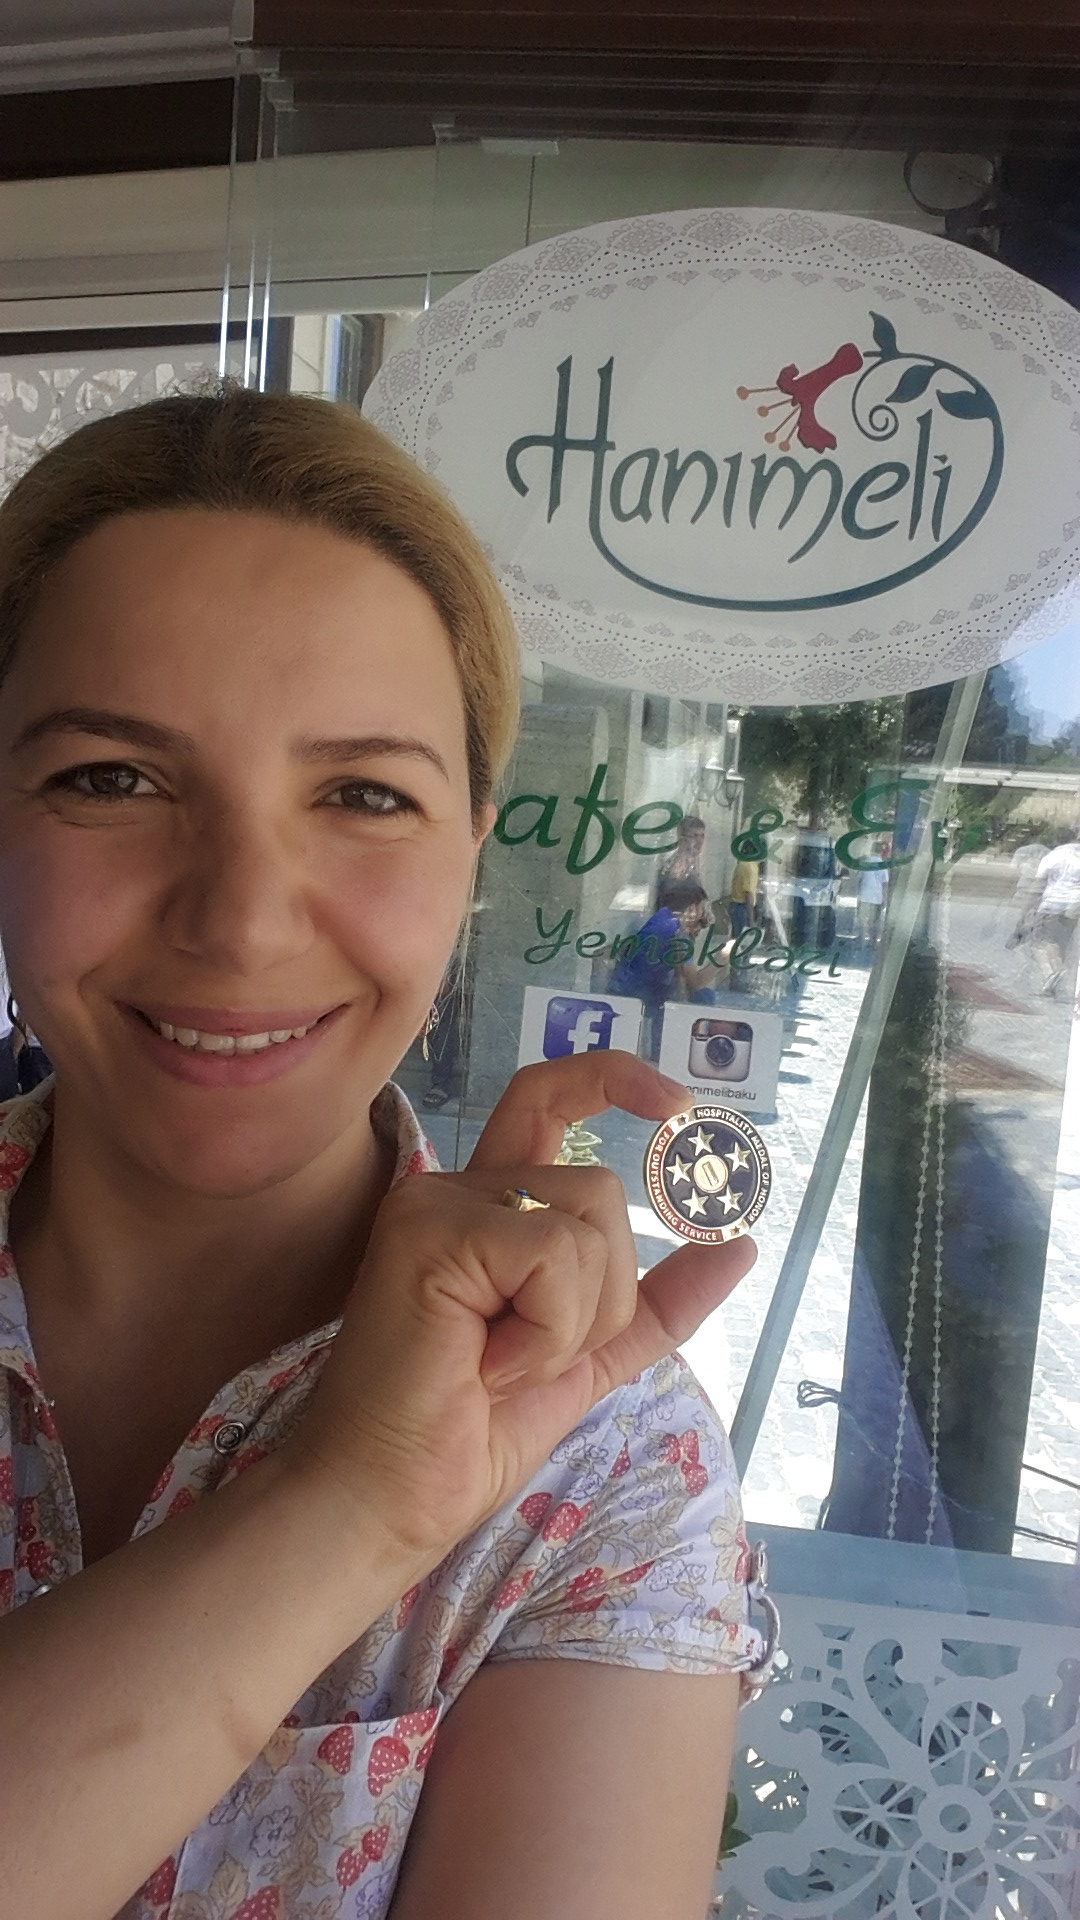 GUNEL at Hanimeli cafe